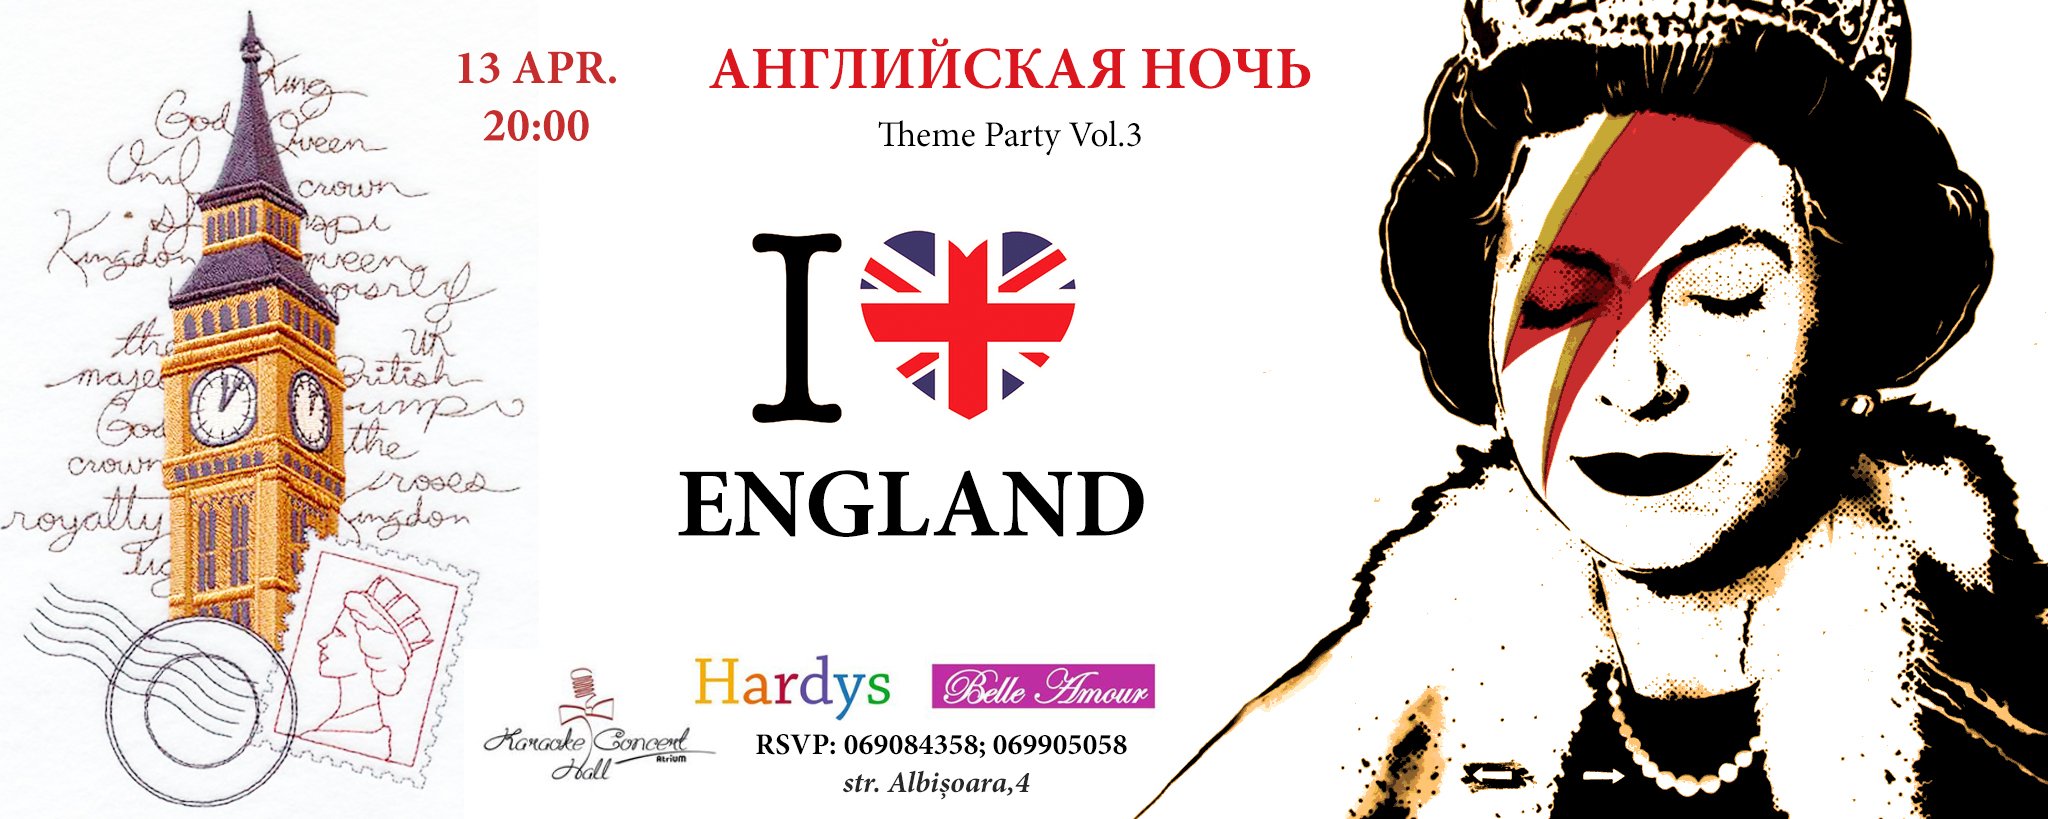 Рисунки вечеринок на английском. Английская вечеринка. Вечеринка в английском стиле афиша. Афиша английская вечеринка.